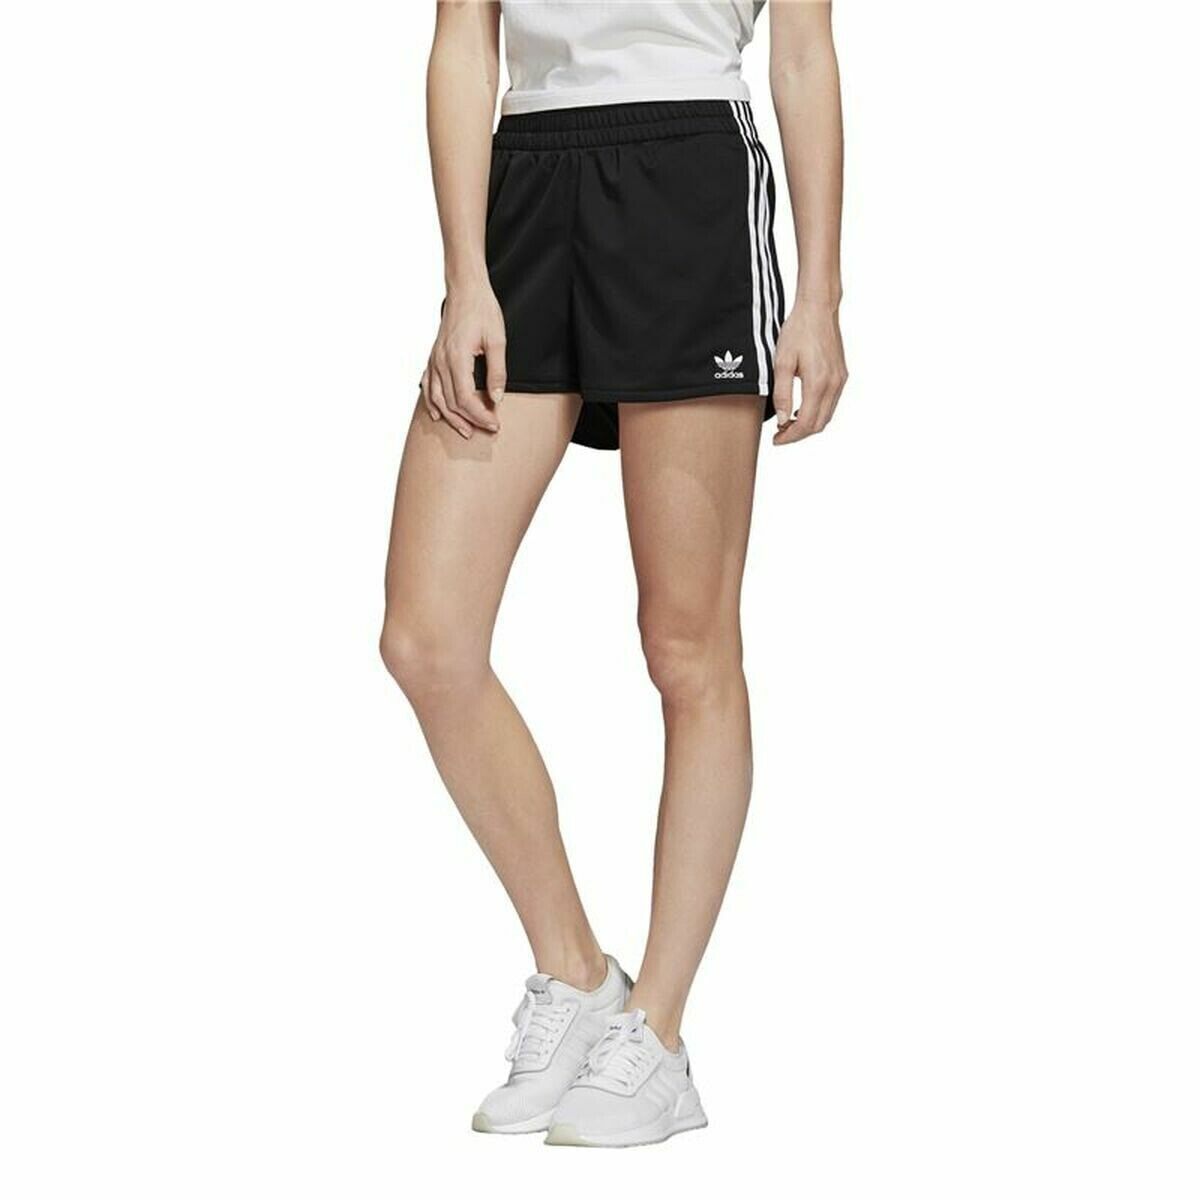 Sports Shorts for Women Adidas 3 Stripes Black